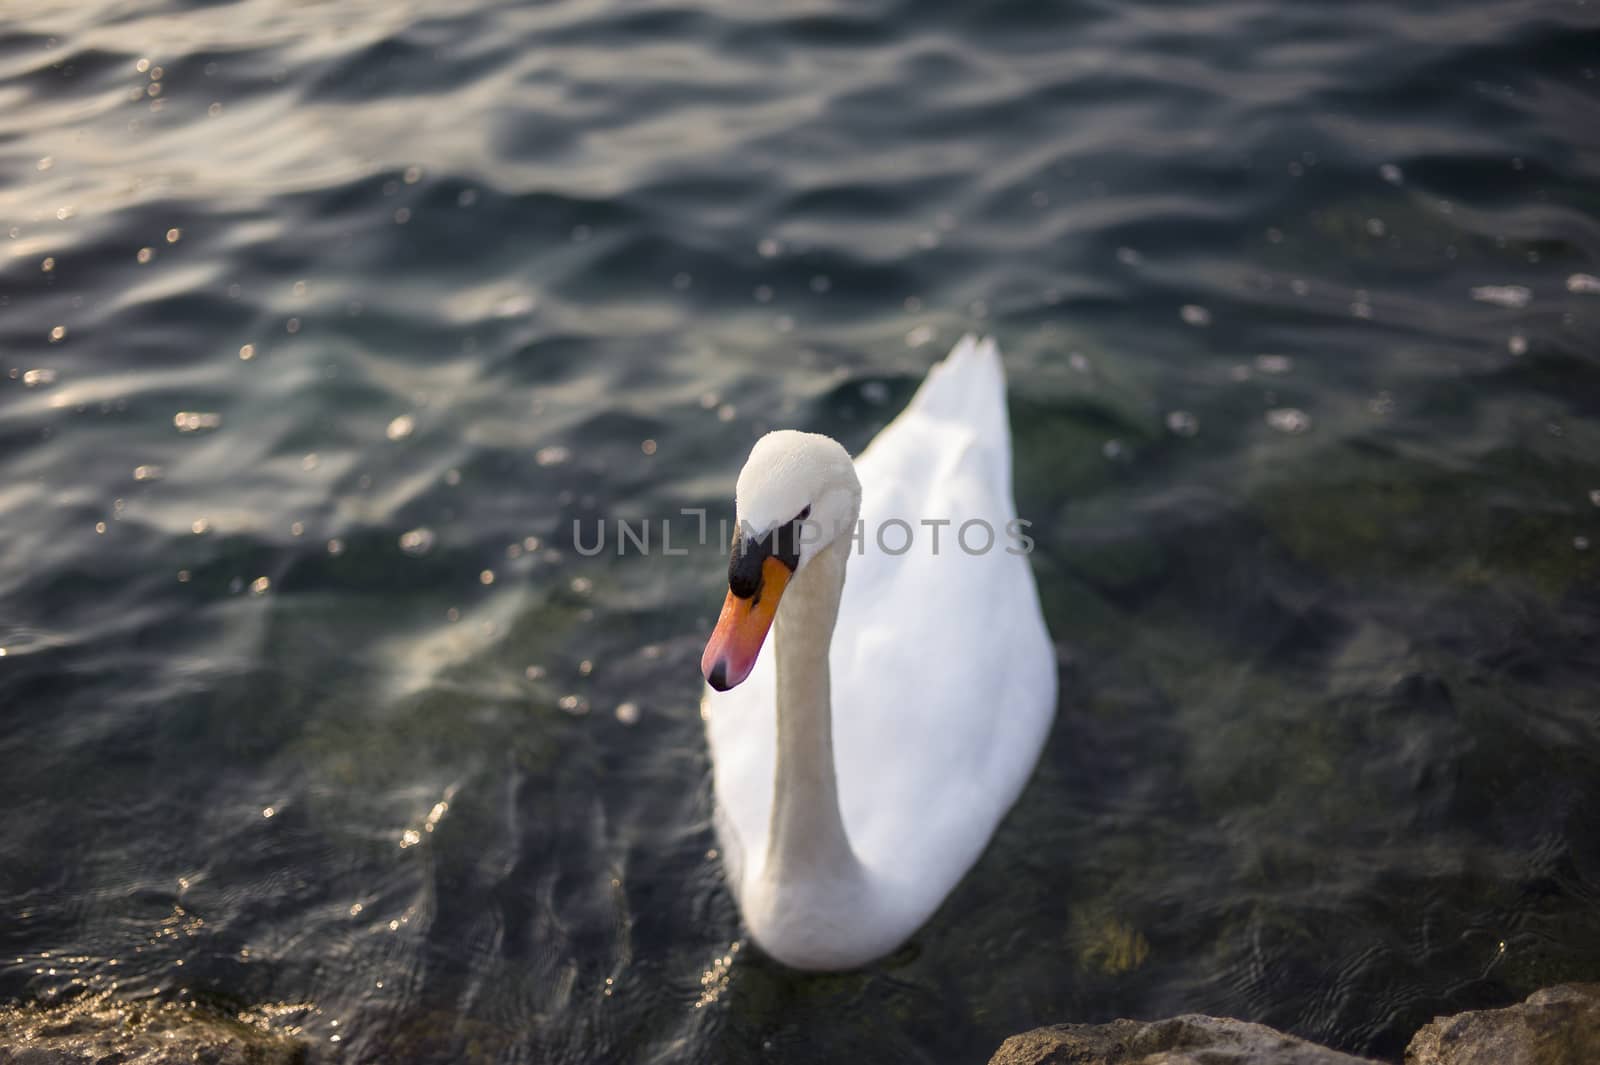 An elegant swan in the lake Garda, northern Italy.